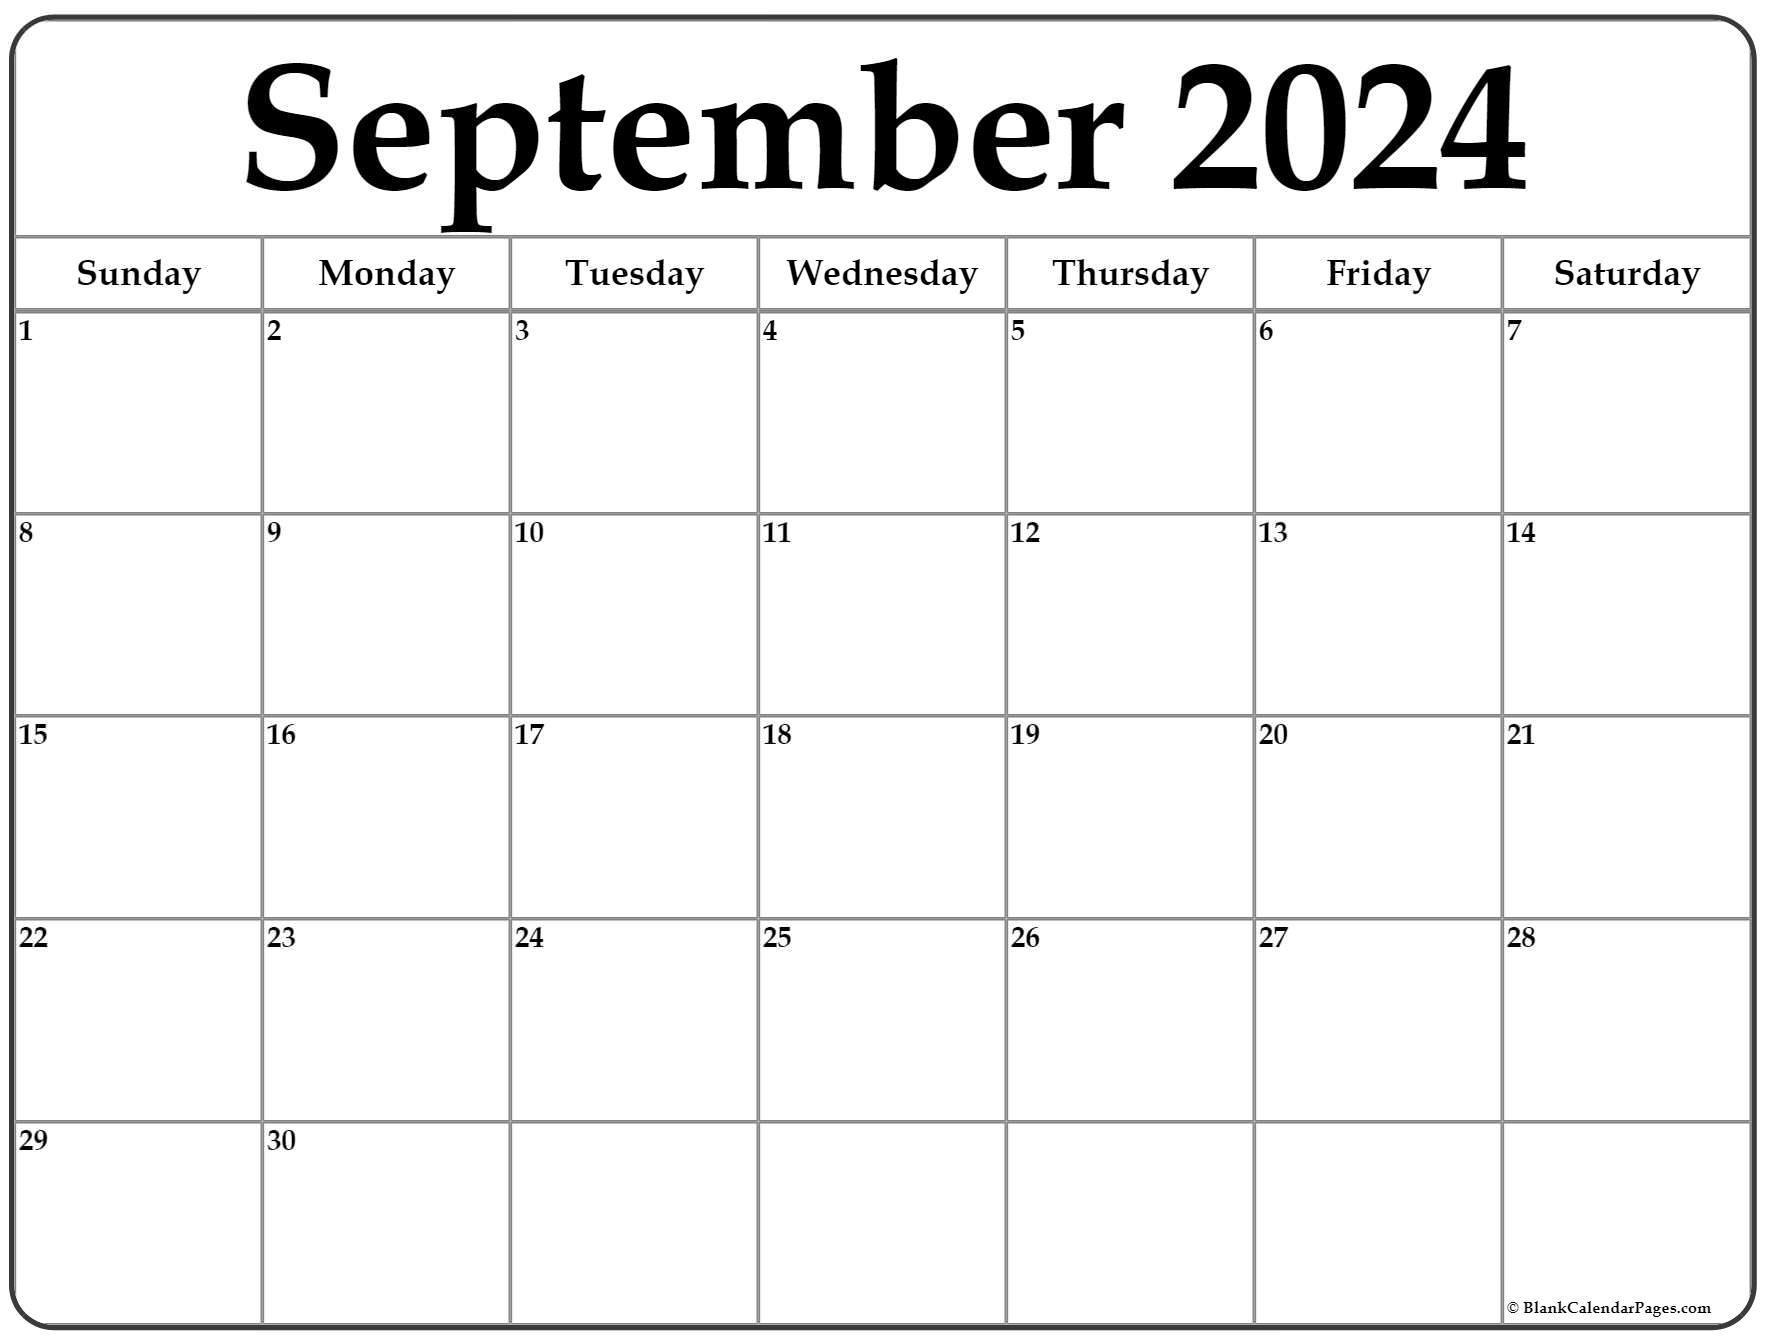 September Blank Calendar 2022 September 2022 Calendar | Free Printable Calendar Templates